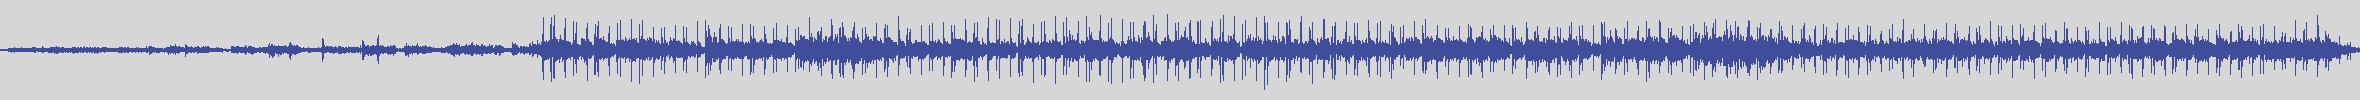 digiphonic_records [DPR013] Little Tony - La Tua Canzone Sha Na Na [Original Mix] audio wave form